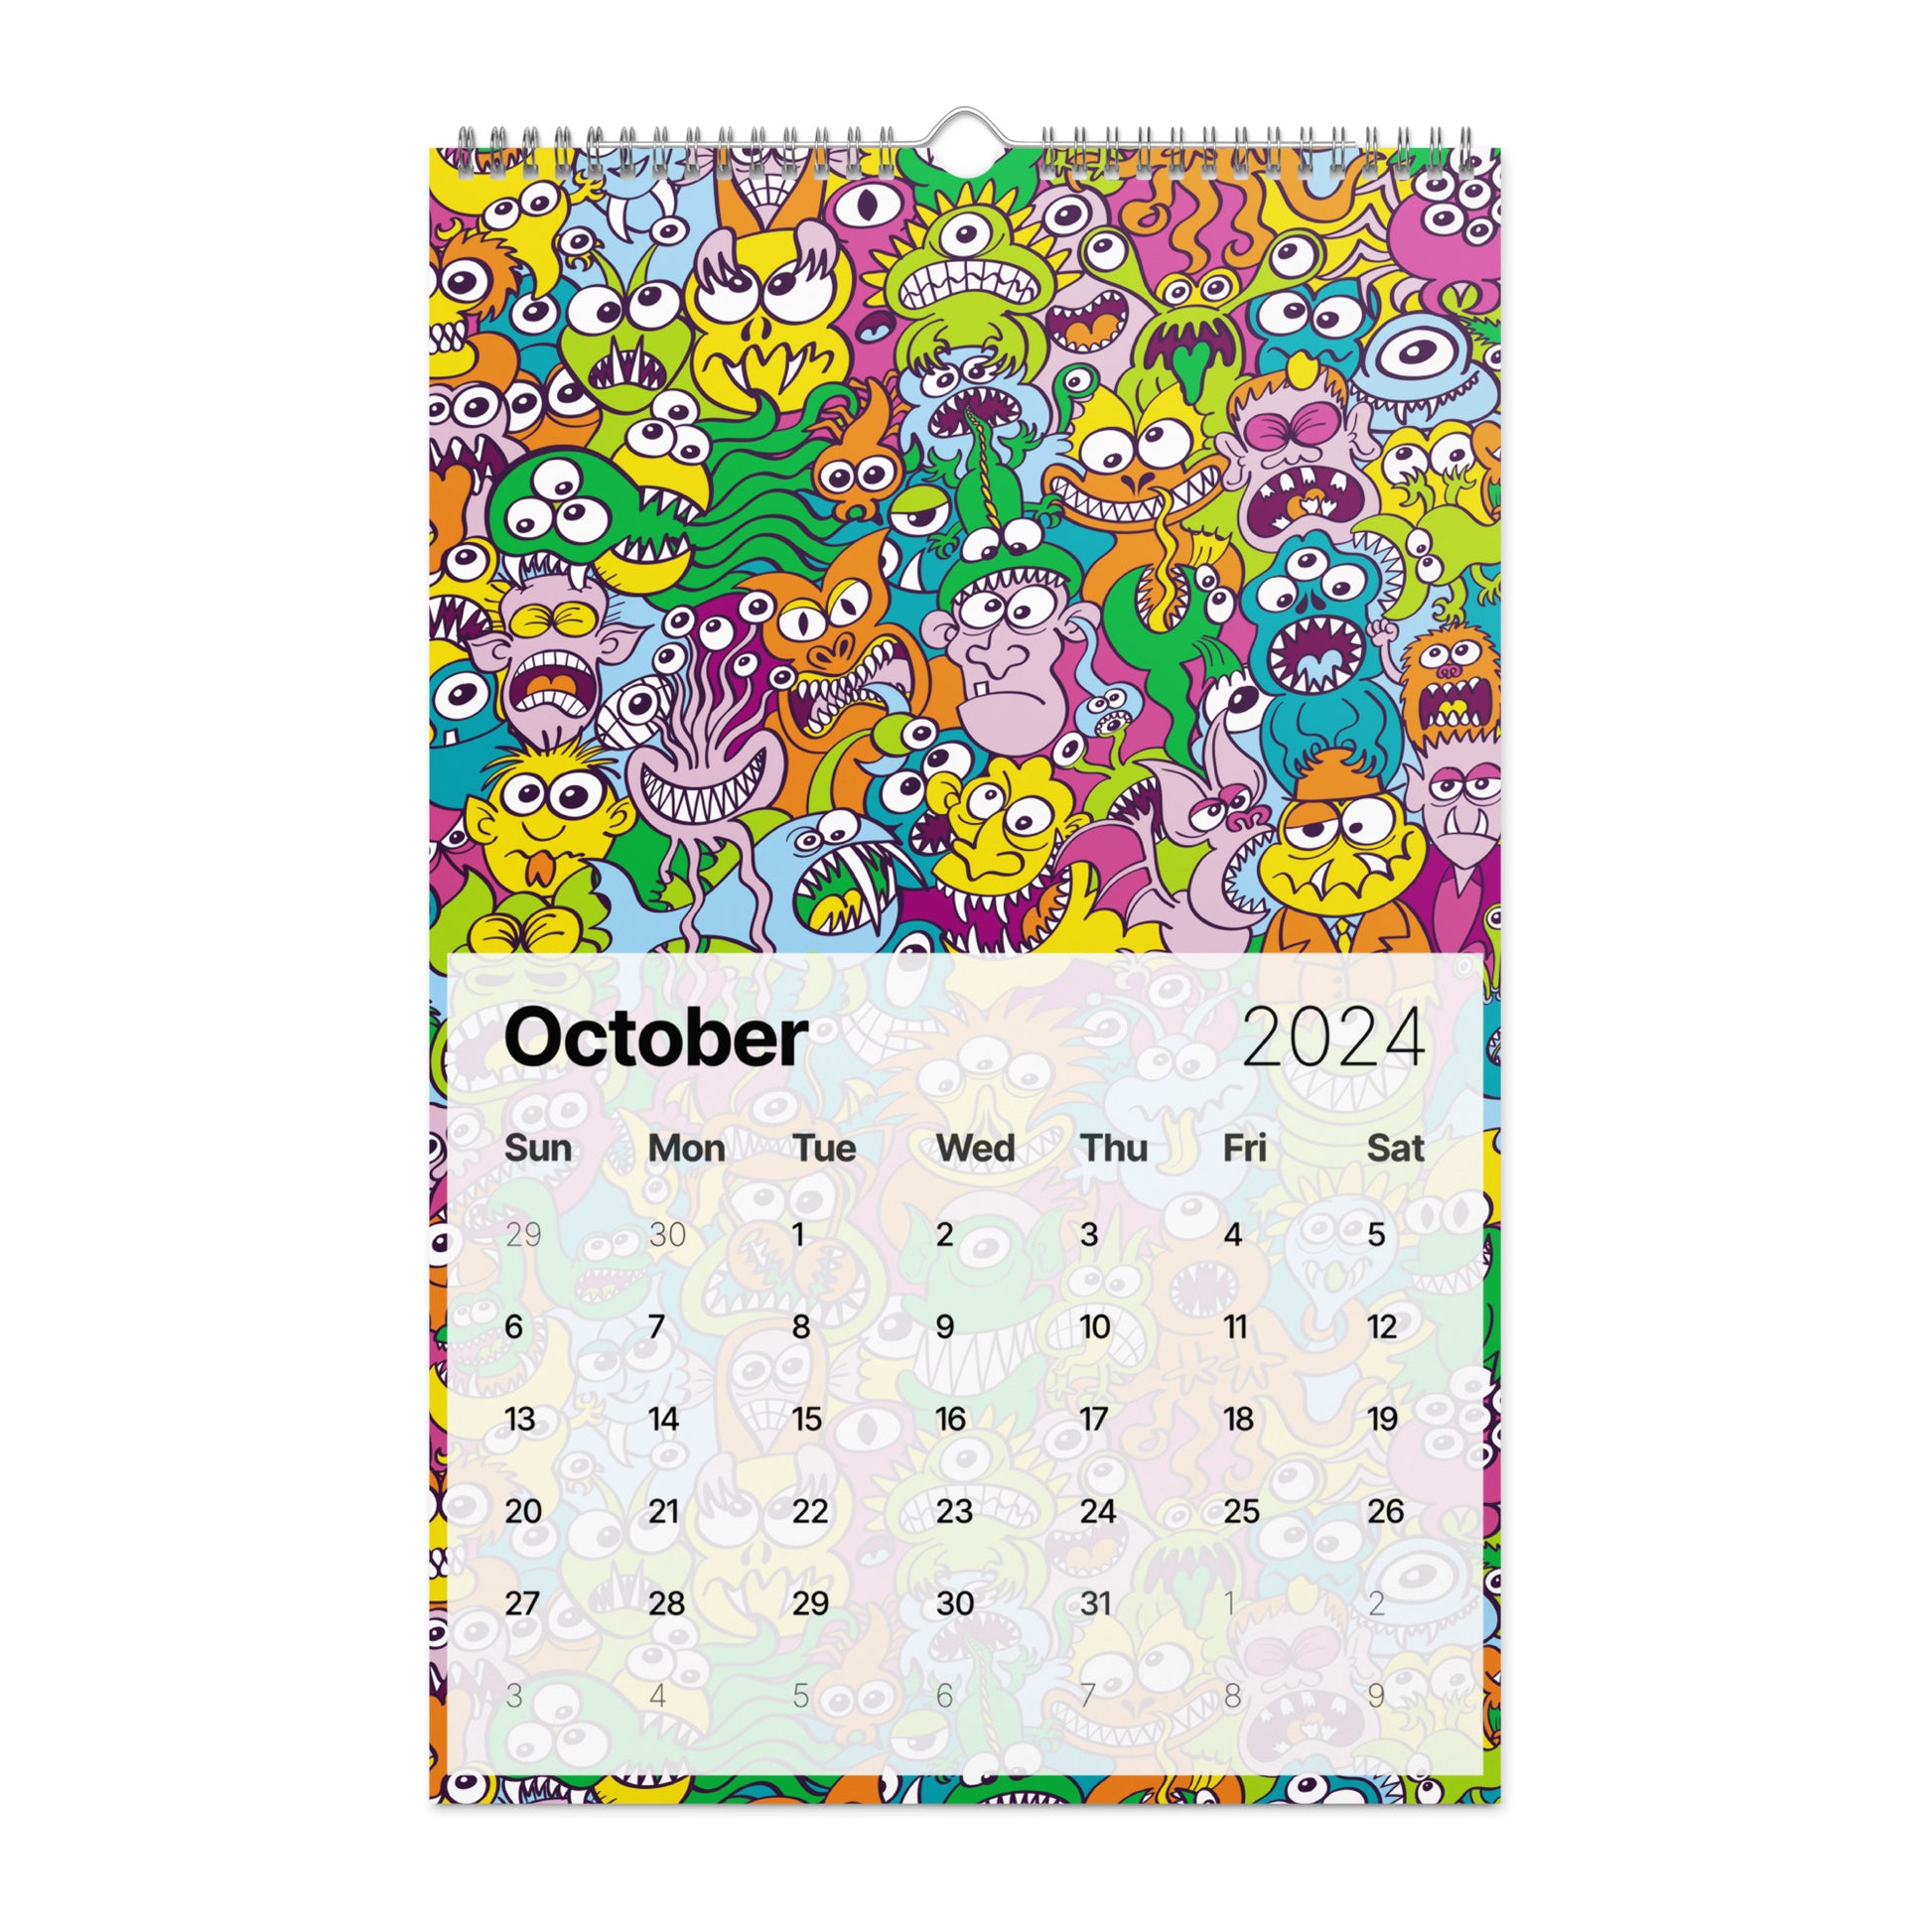 Zoo&co’s Doodle Art Wall calendar (2024). 11 x 17. October